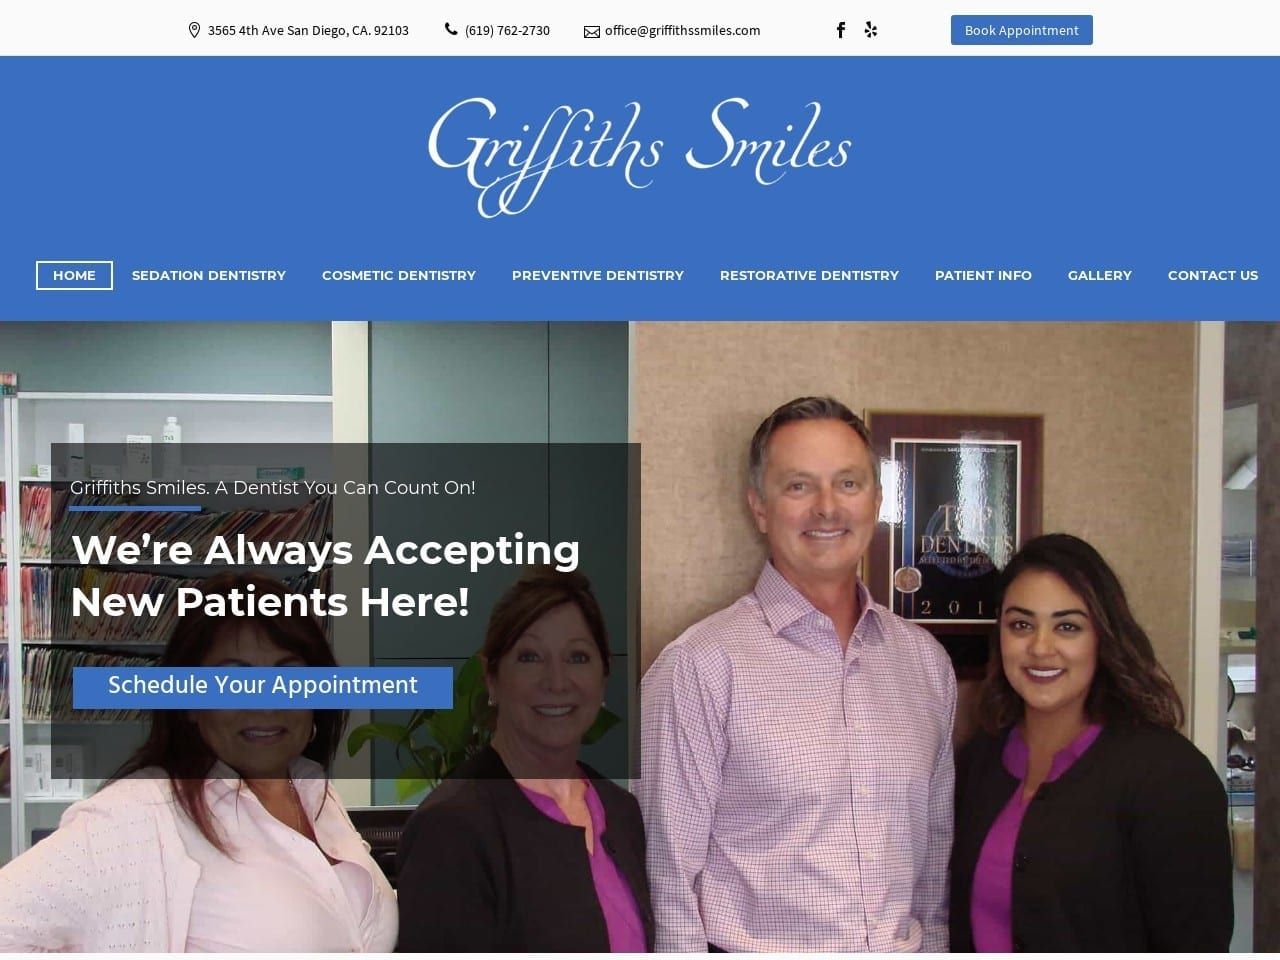 Griffiths Smiles Website Screenshot from griffithssmiles.com